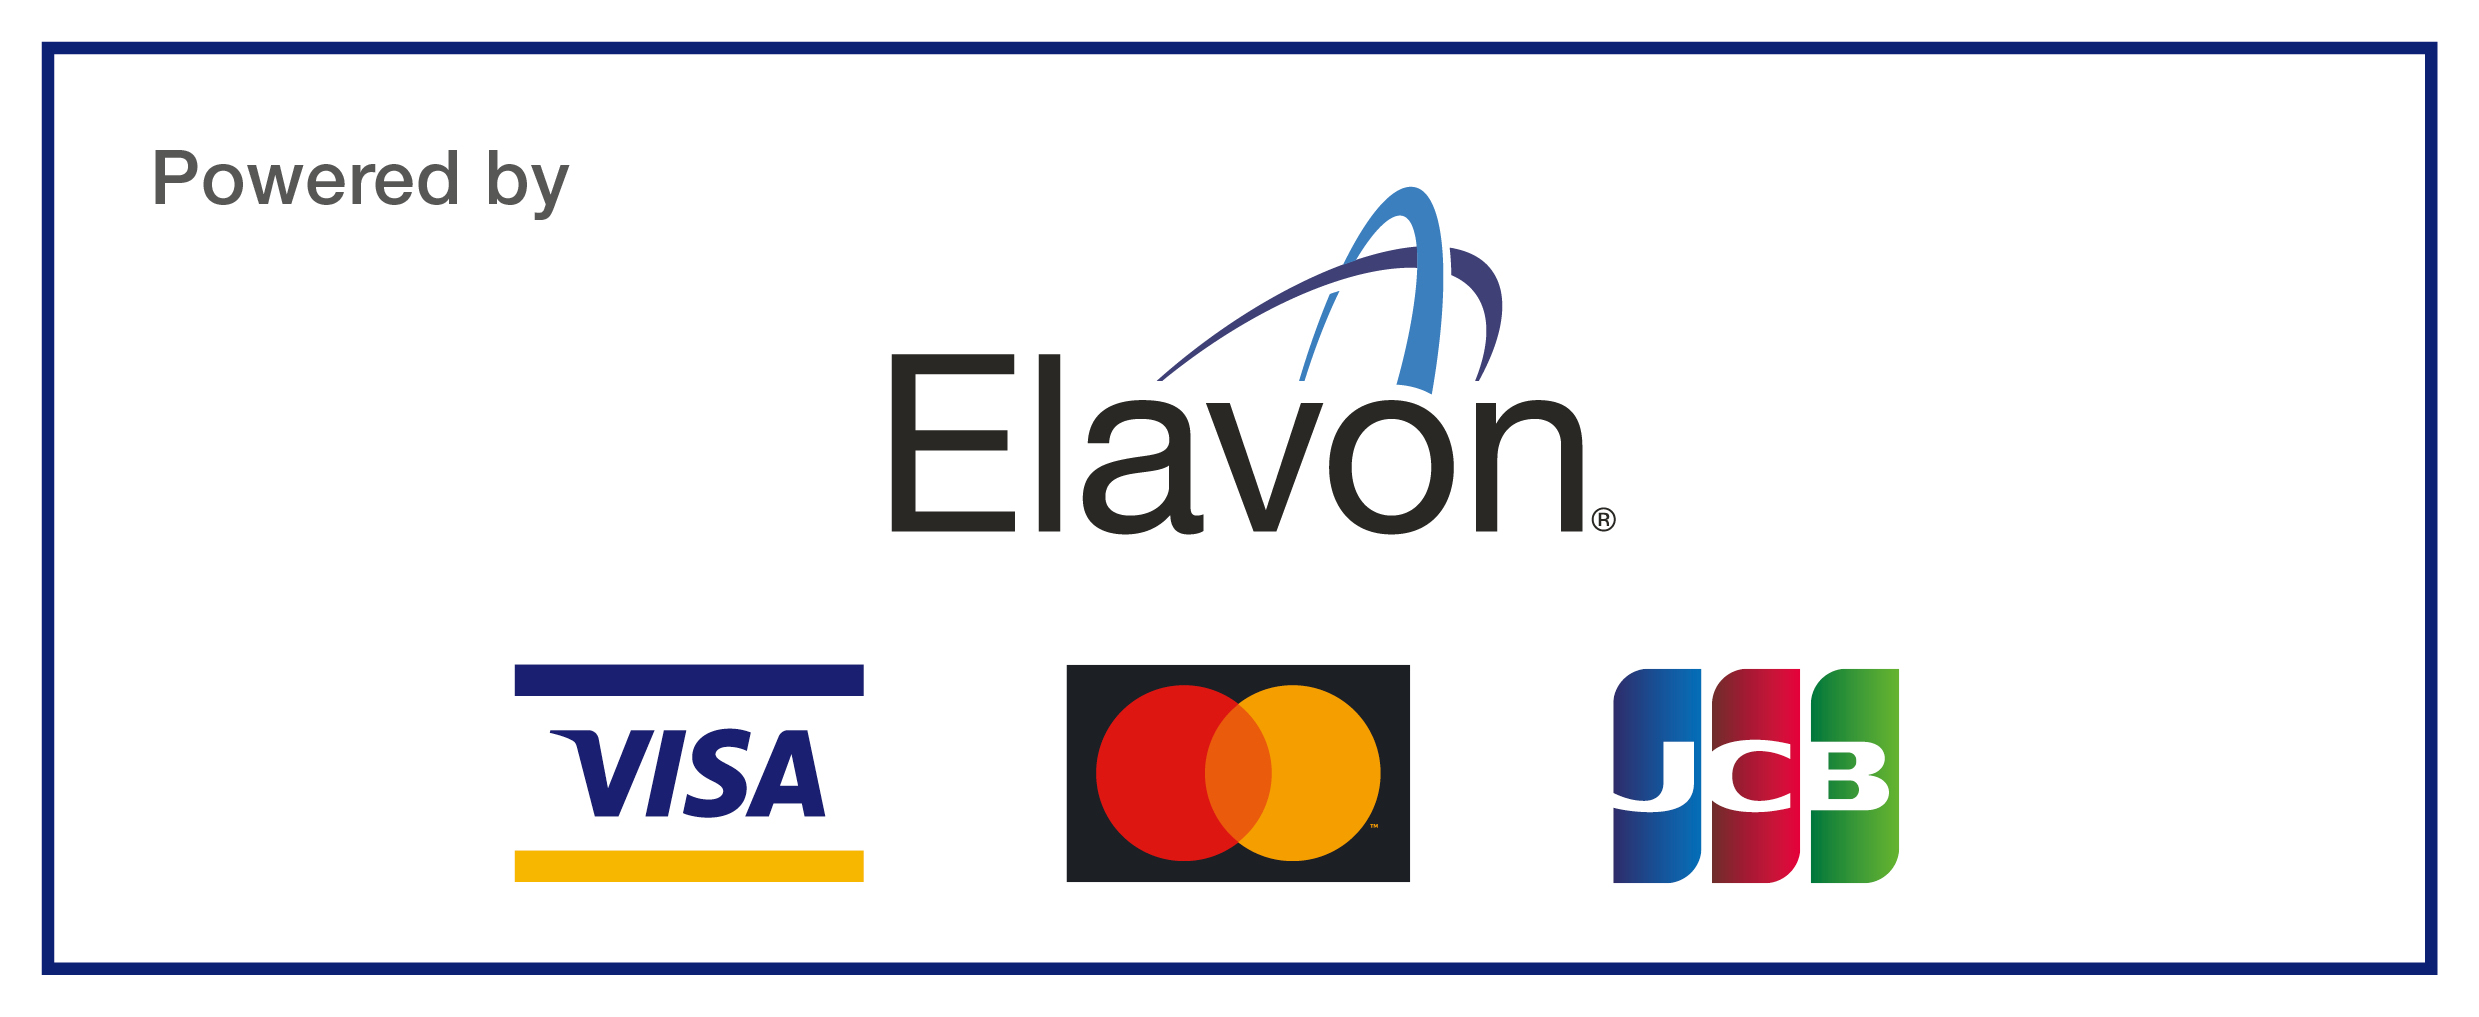 Card scheme logo: Visa, Mastercard, JCB